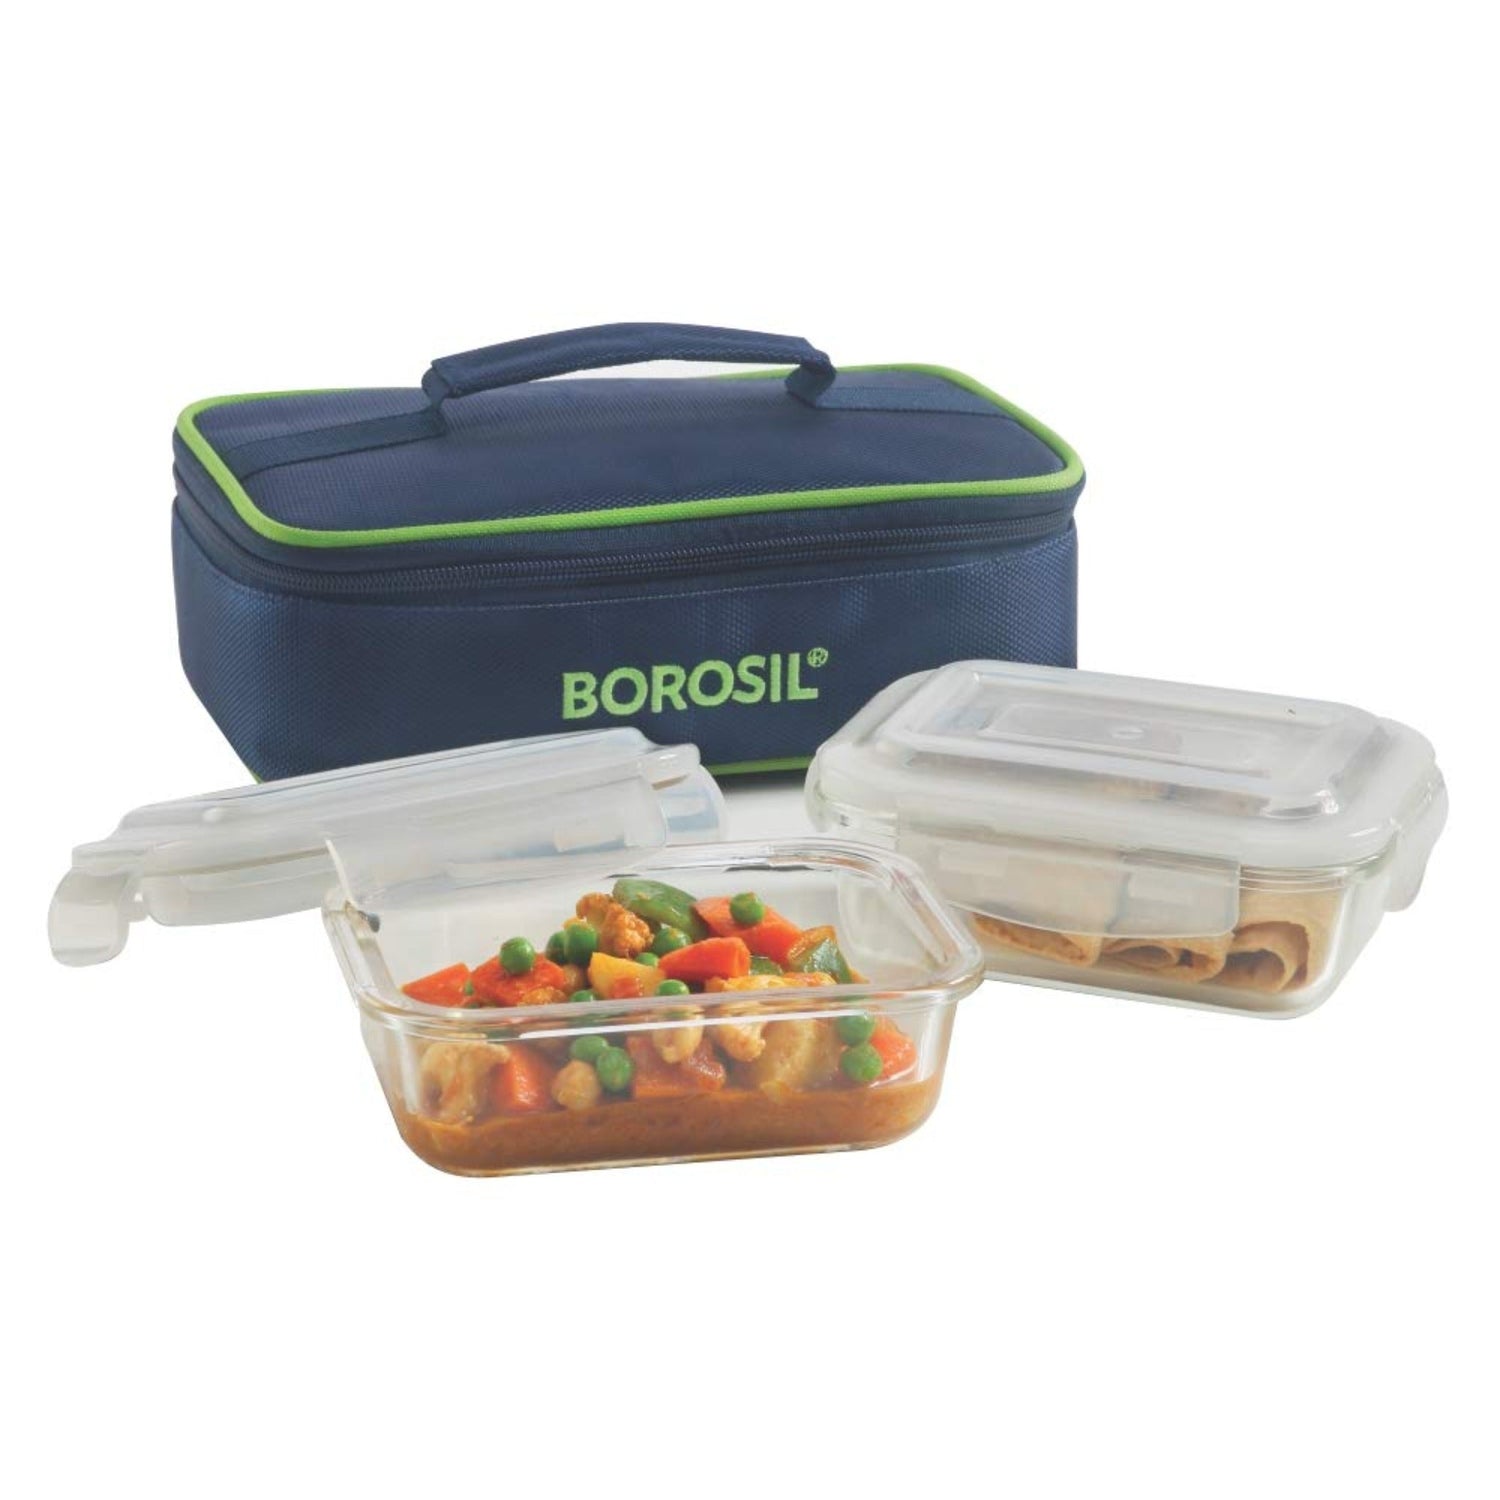 Borosil Microwavavle Glass Lunch Box